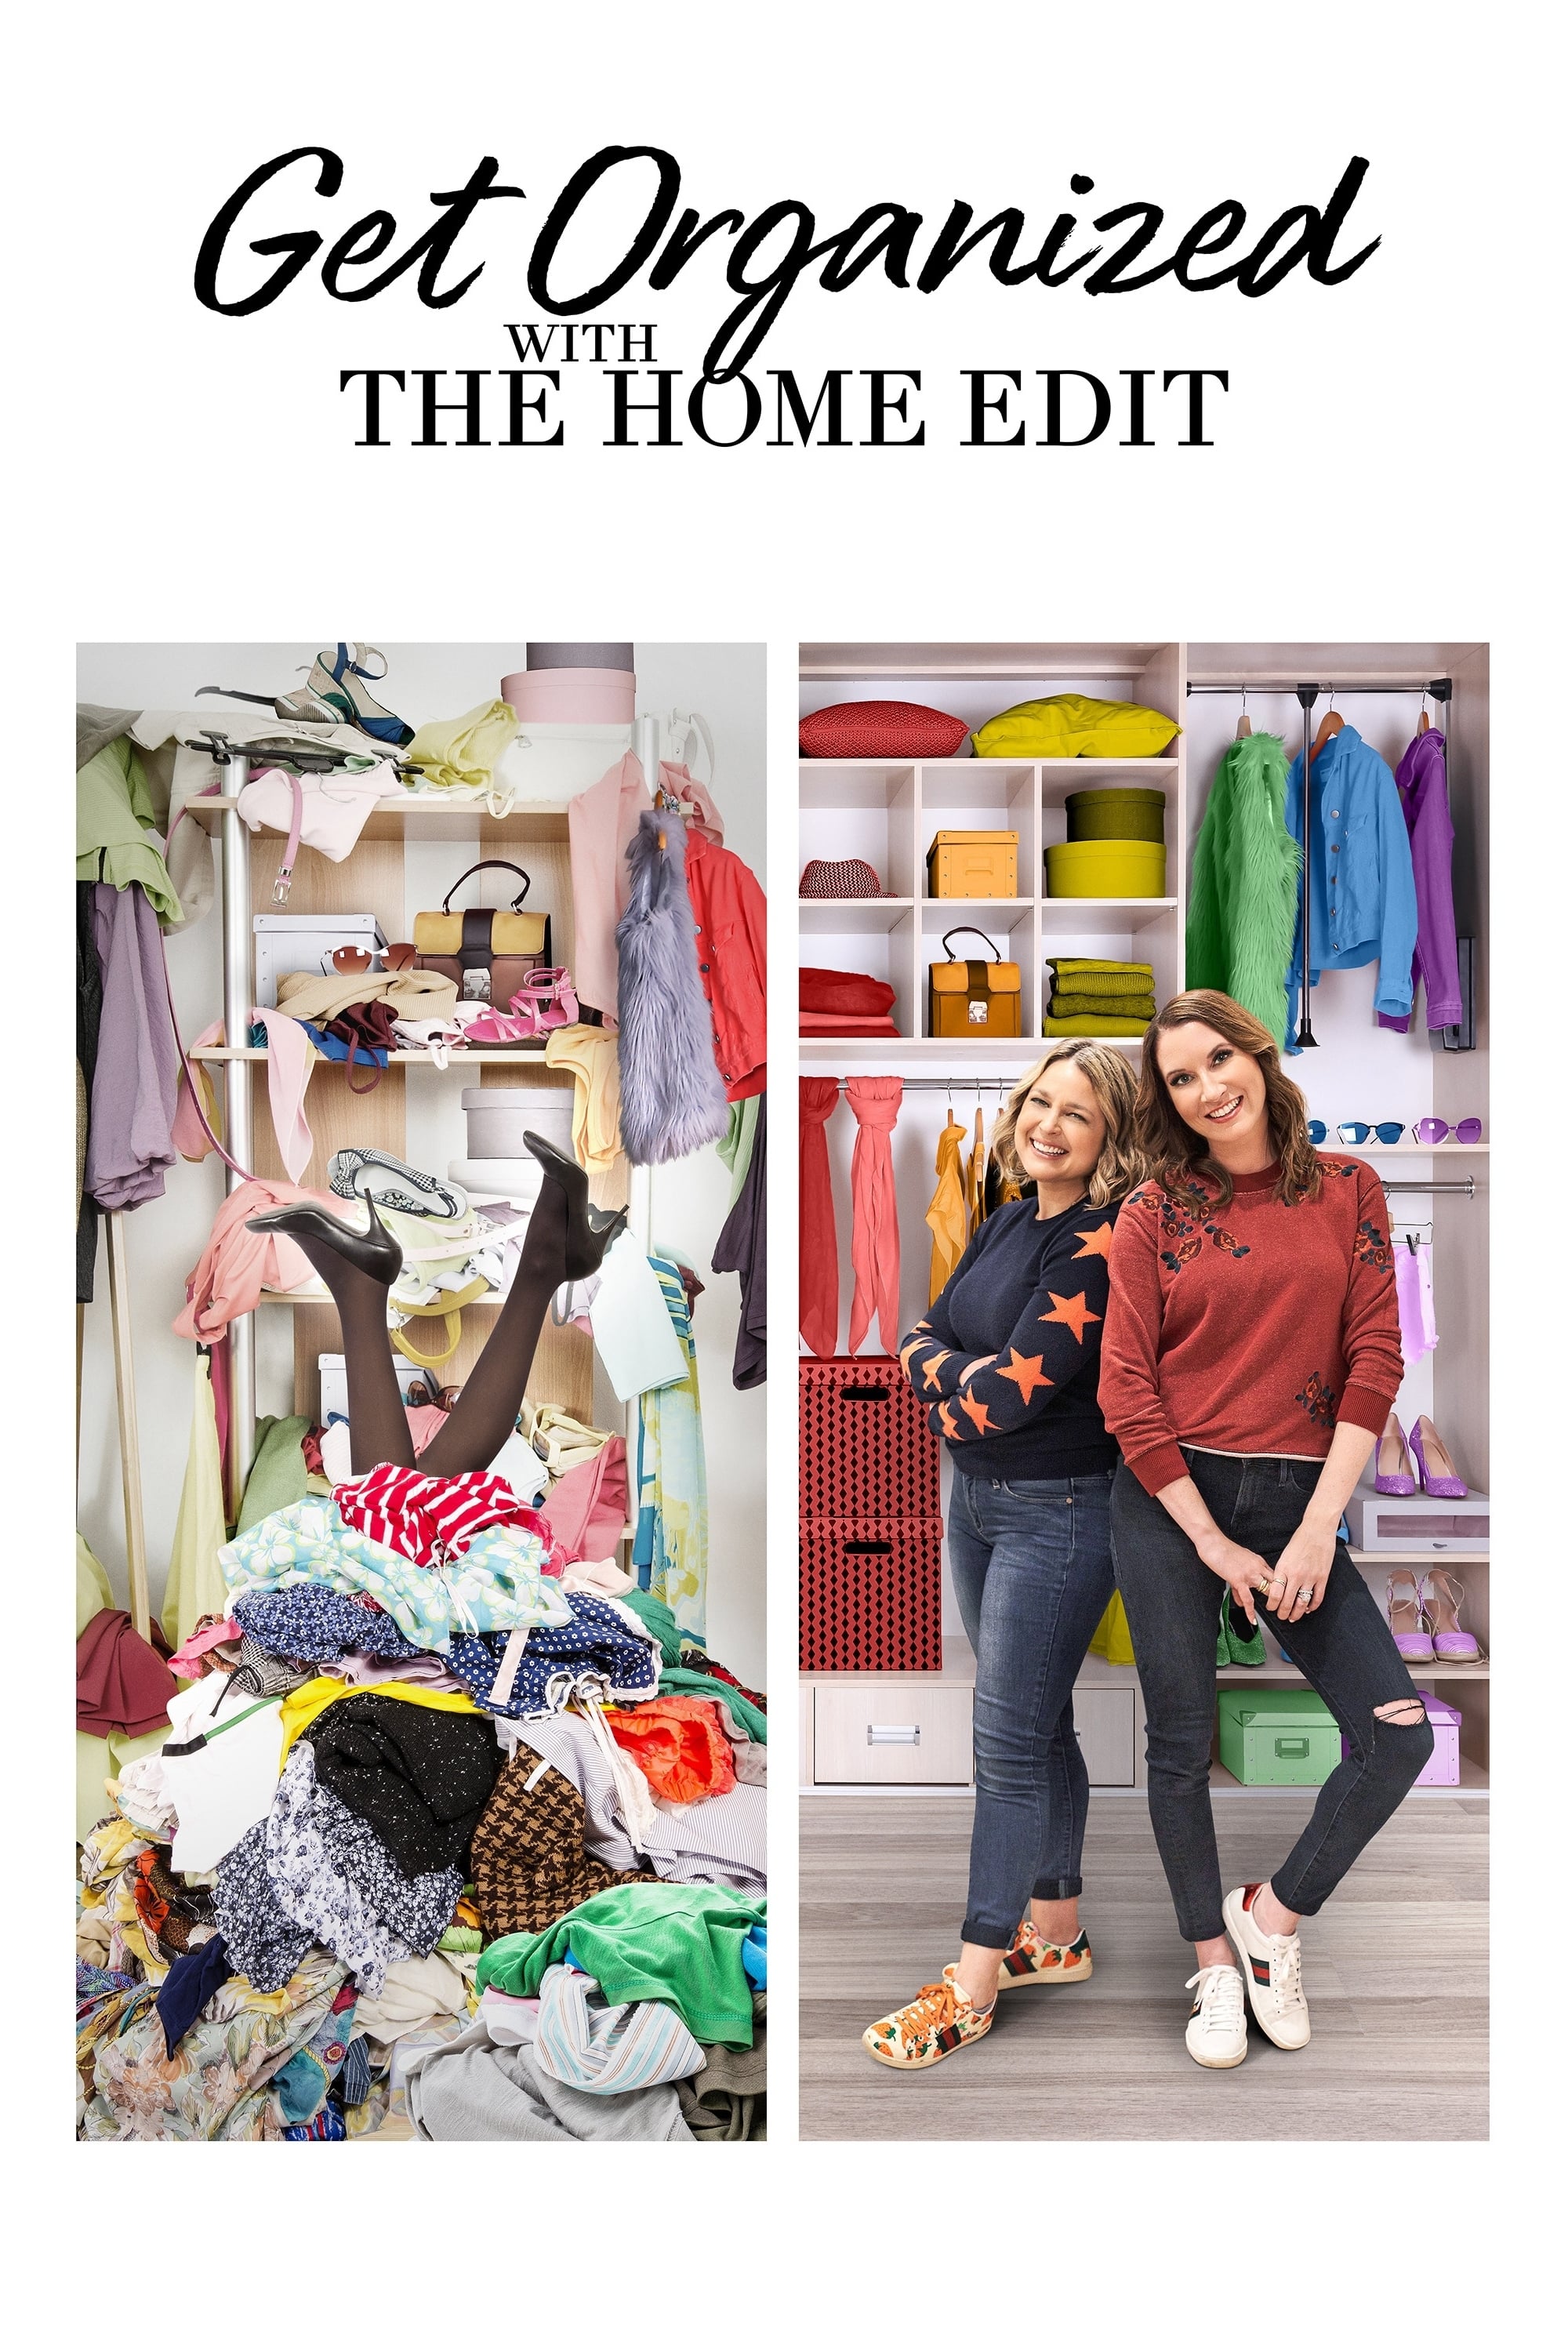 The Home Edit - A Arte de Organizar